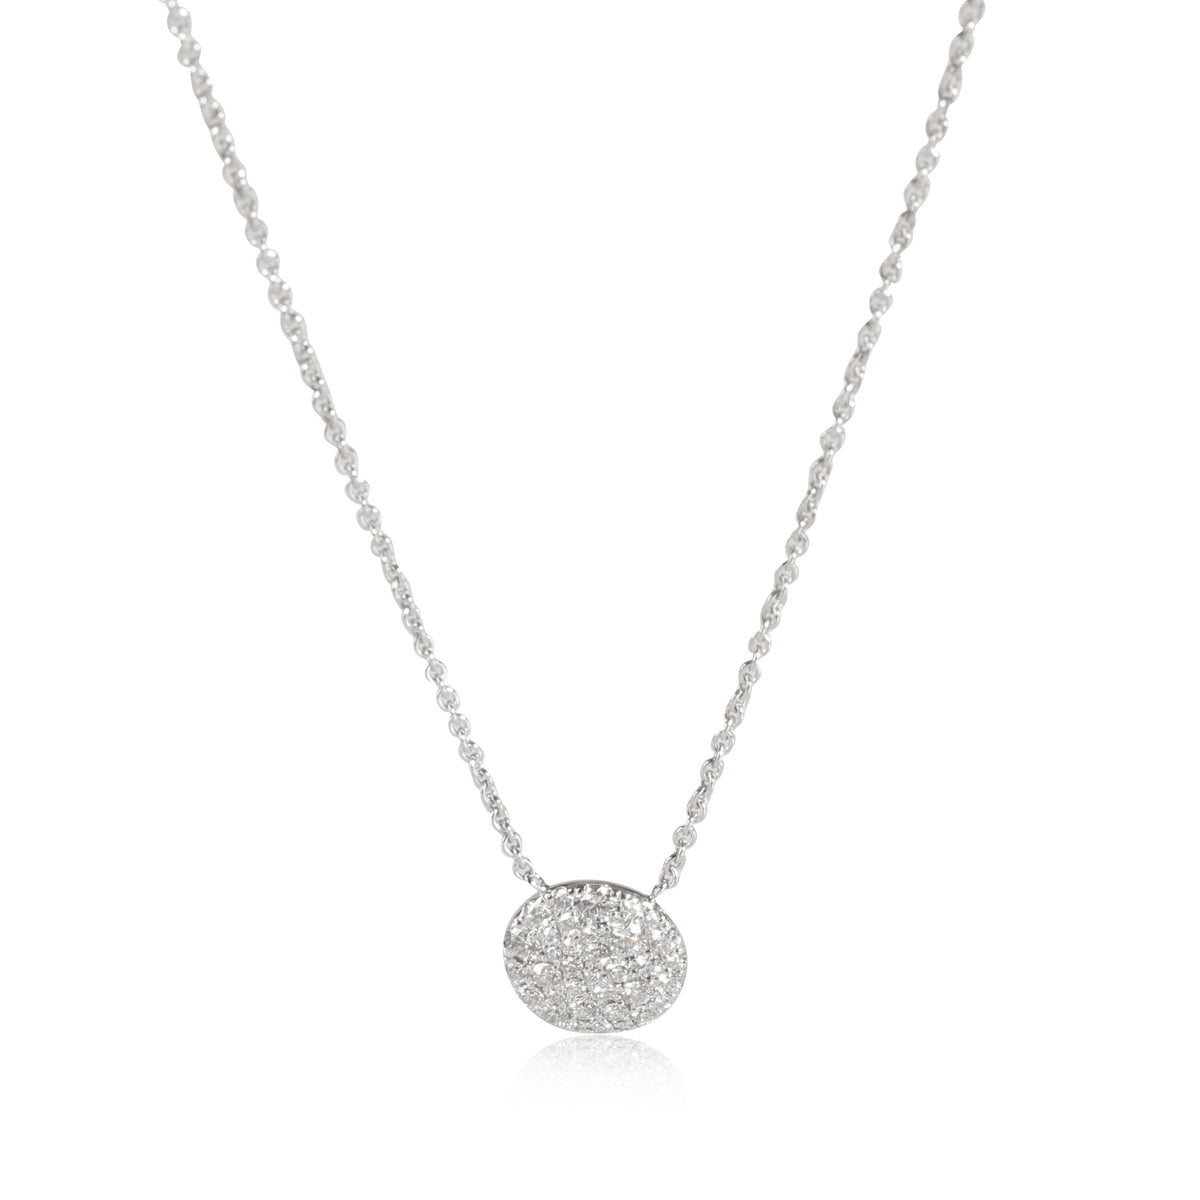 Tiffany & Co. Pave Diamond Pendant in 18K White Gold 0.5 CTW